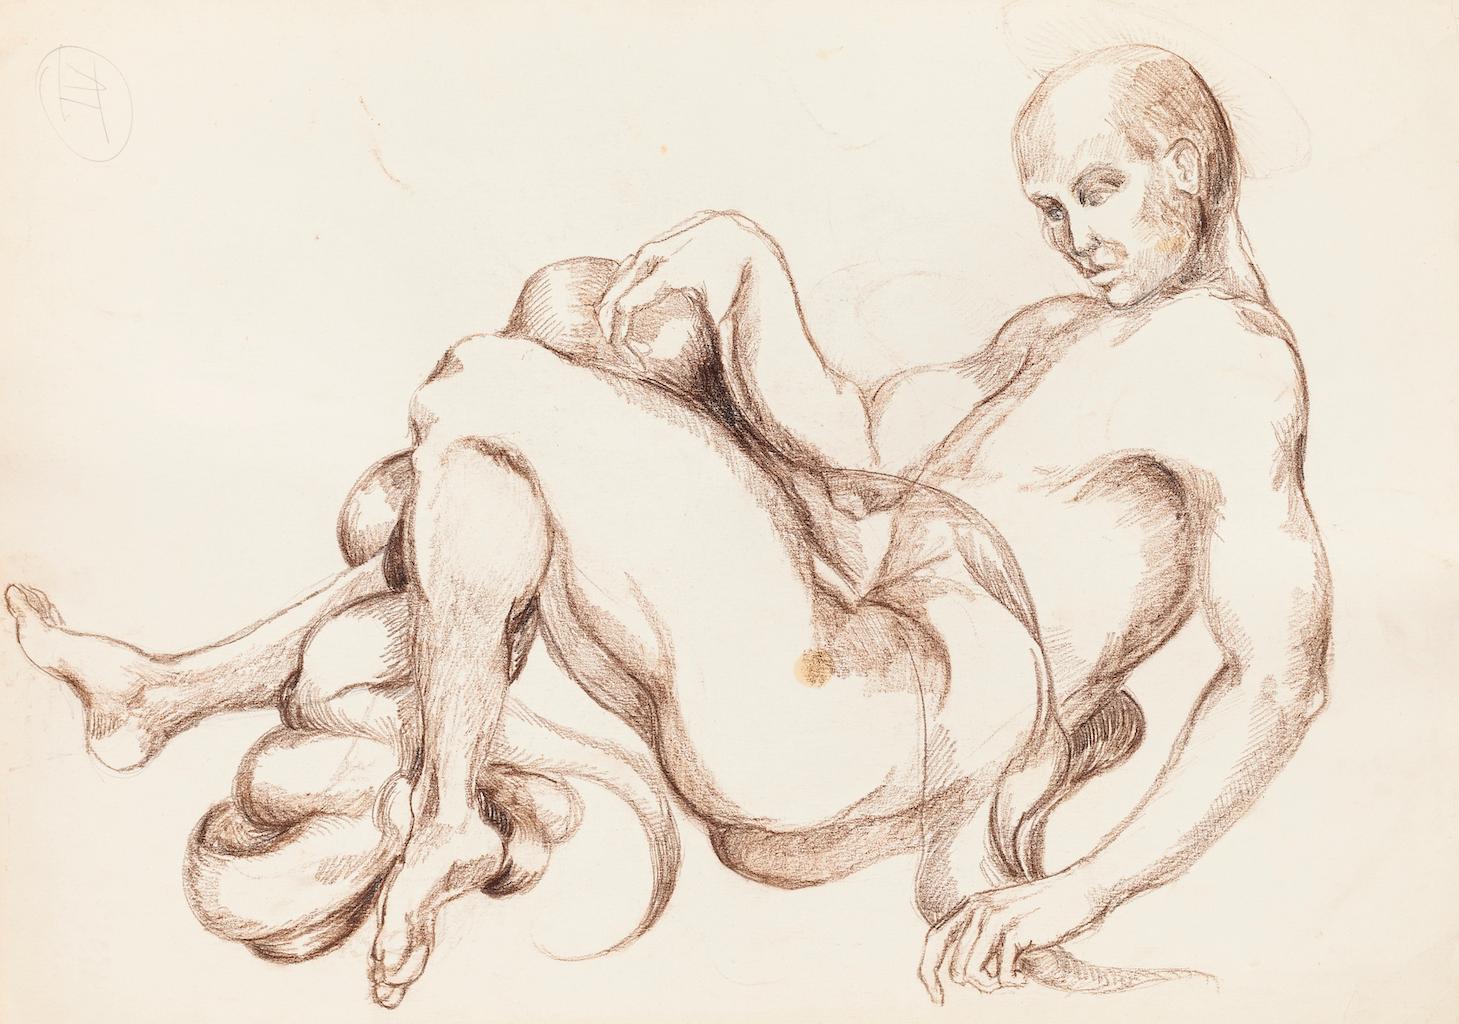 Nude Study - Original Drawing in Charcoal by Debora Sinibaldi - 1985